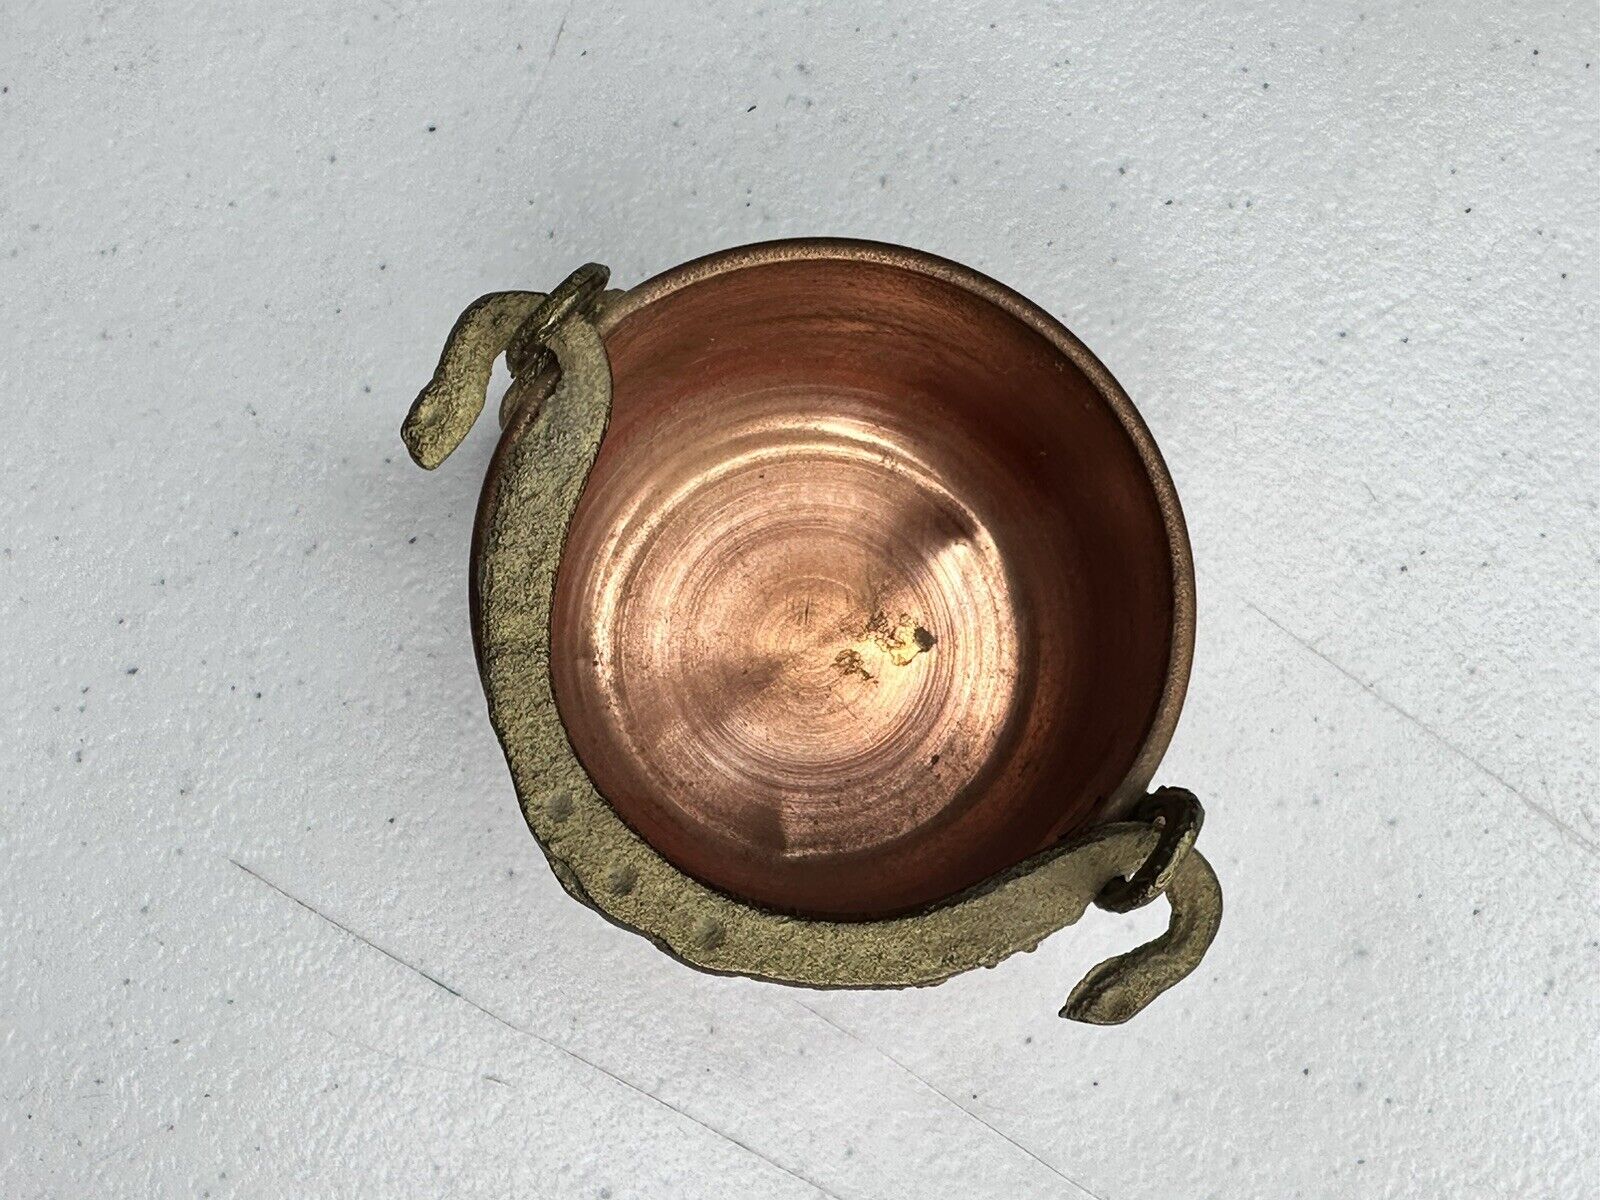 Exquisite Antique Miniature Brass Pot with Ornate Gold Handles - Elegant Tabletop Decor, 2.75" x 1.5" - TreasuTiques